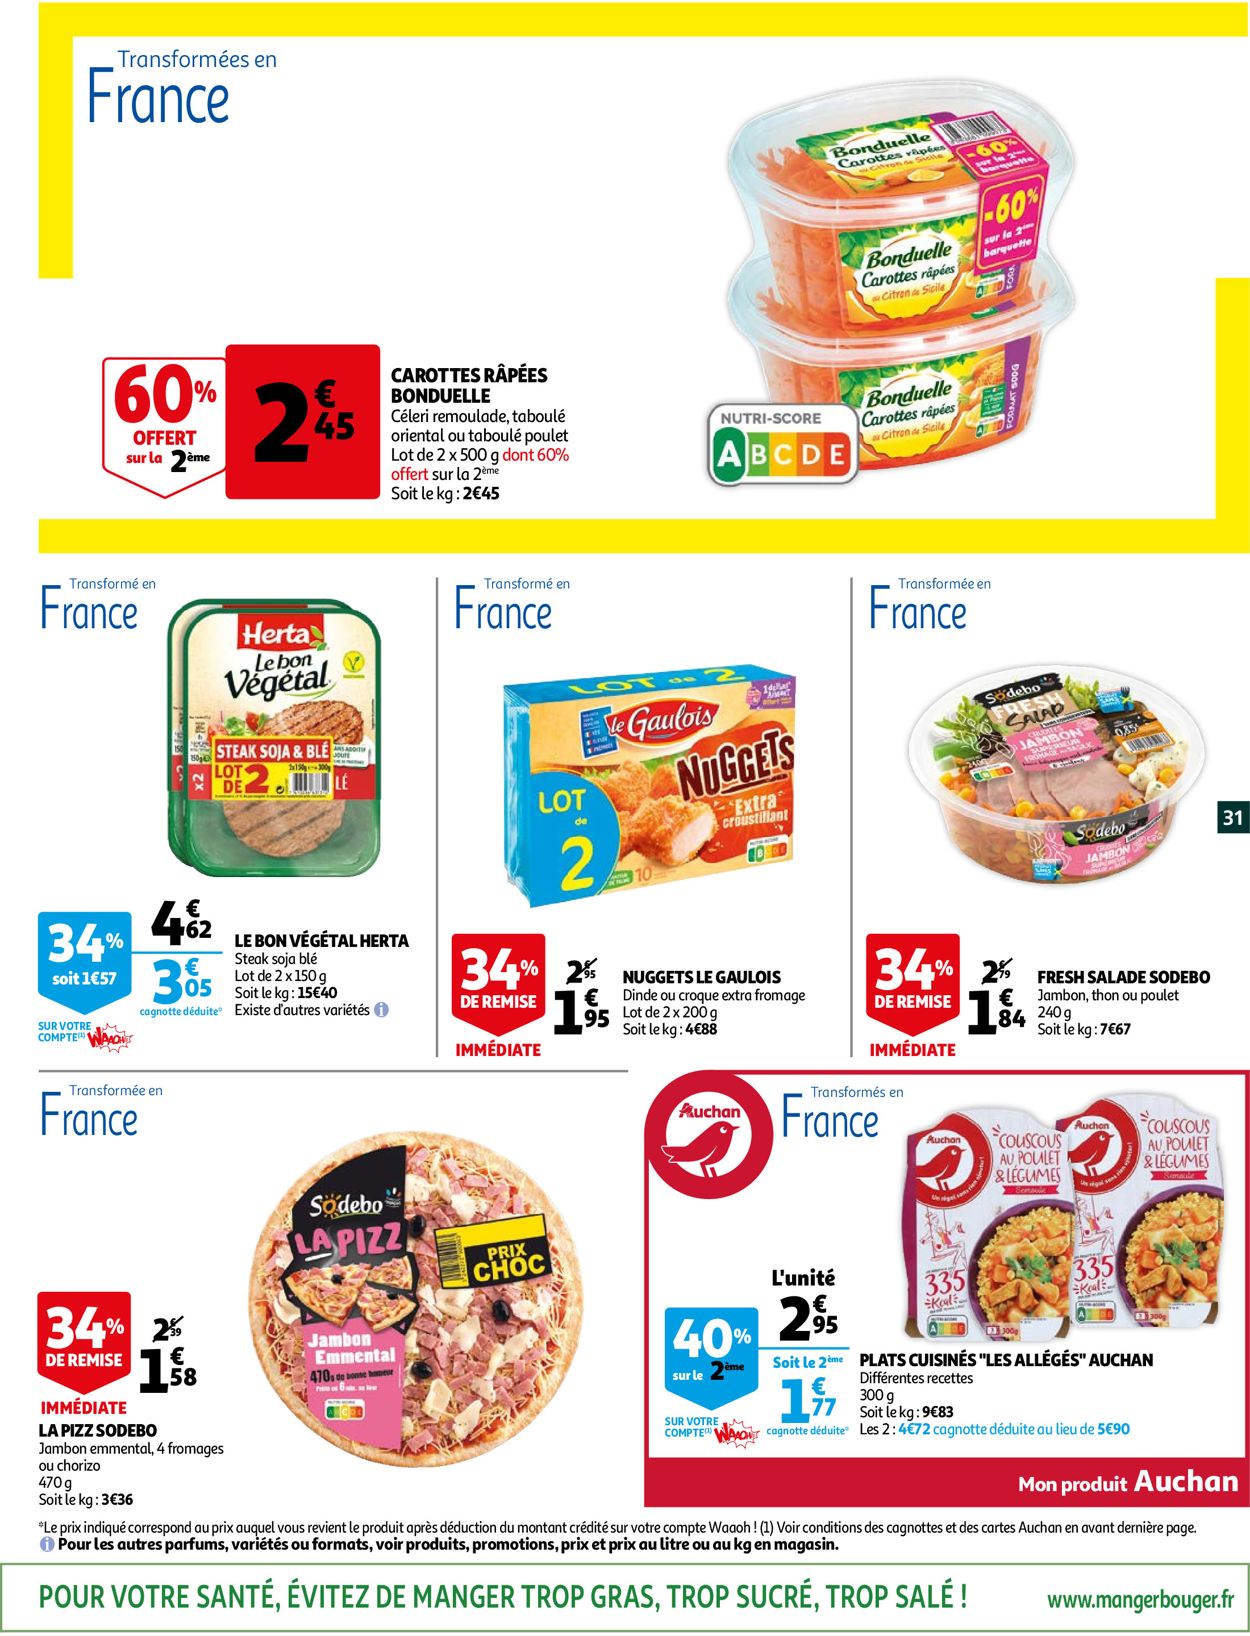 Auchan Catalogue - 29.09-05.10.2021 (Page 31)